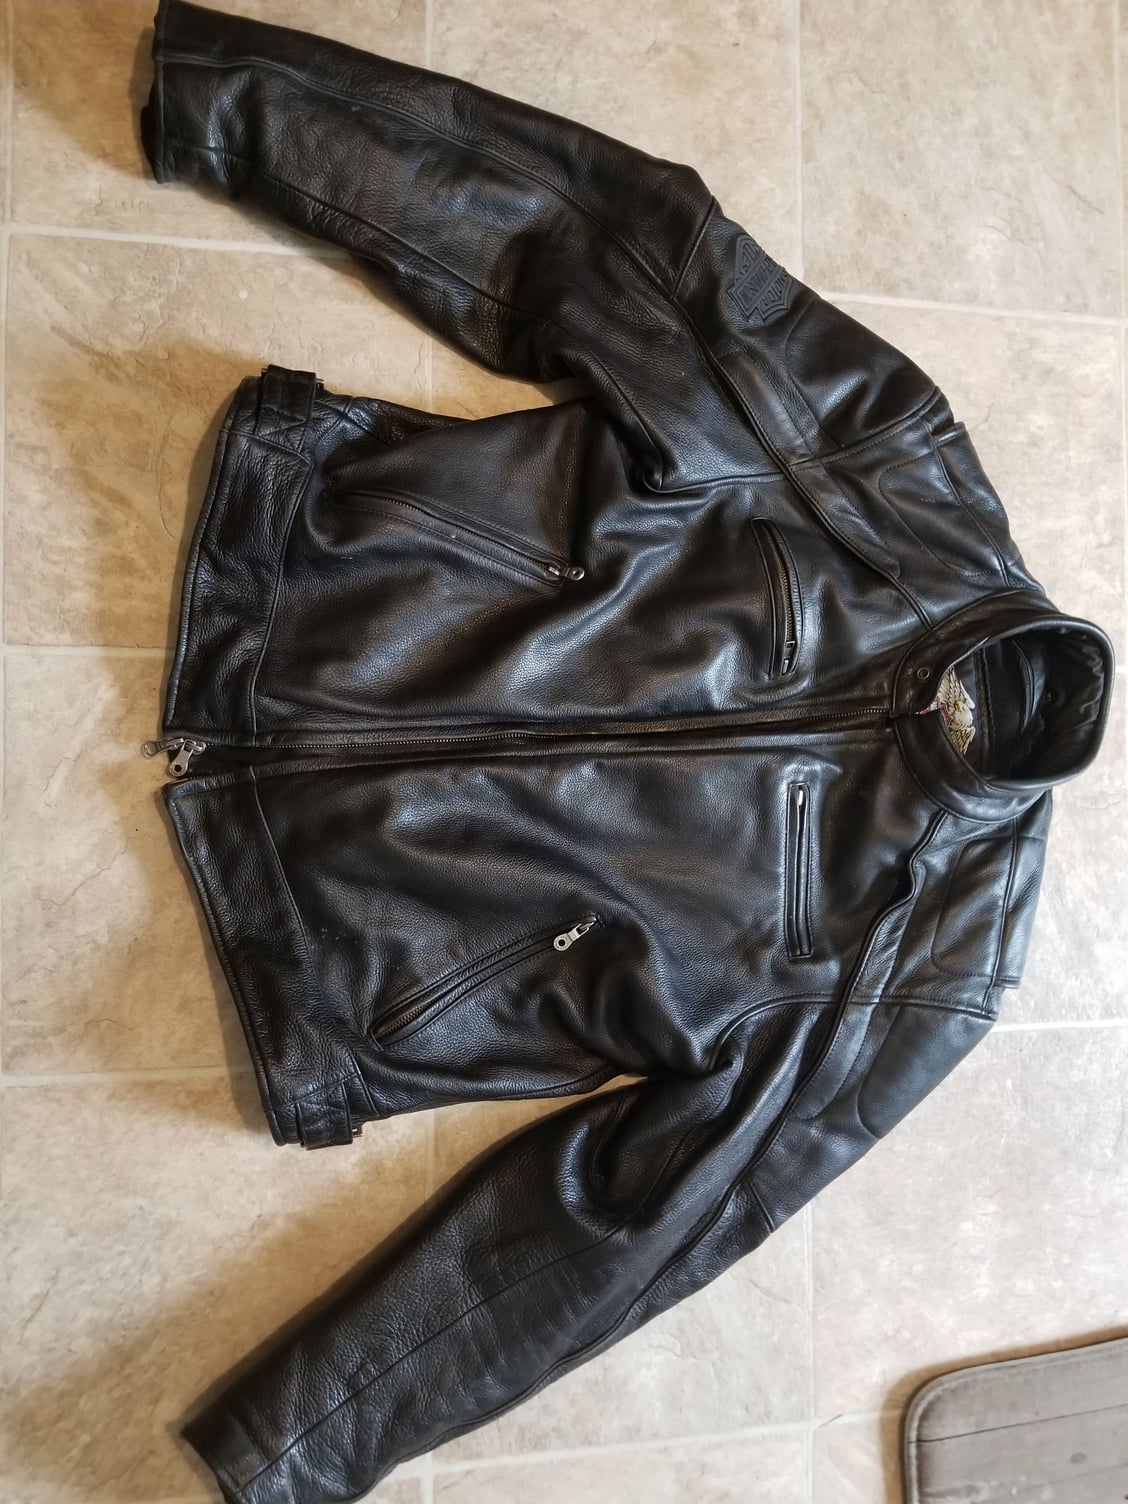 XL Willie G leather jacket. - Harley Davidson Forums